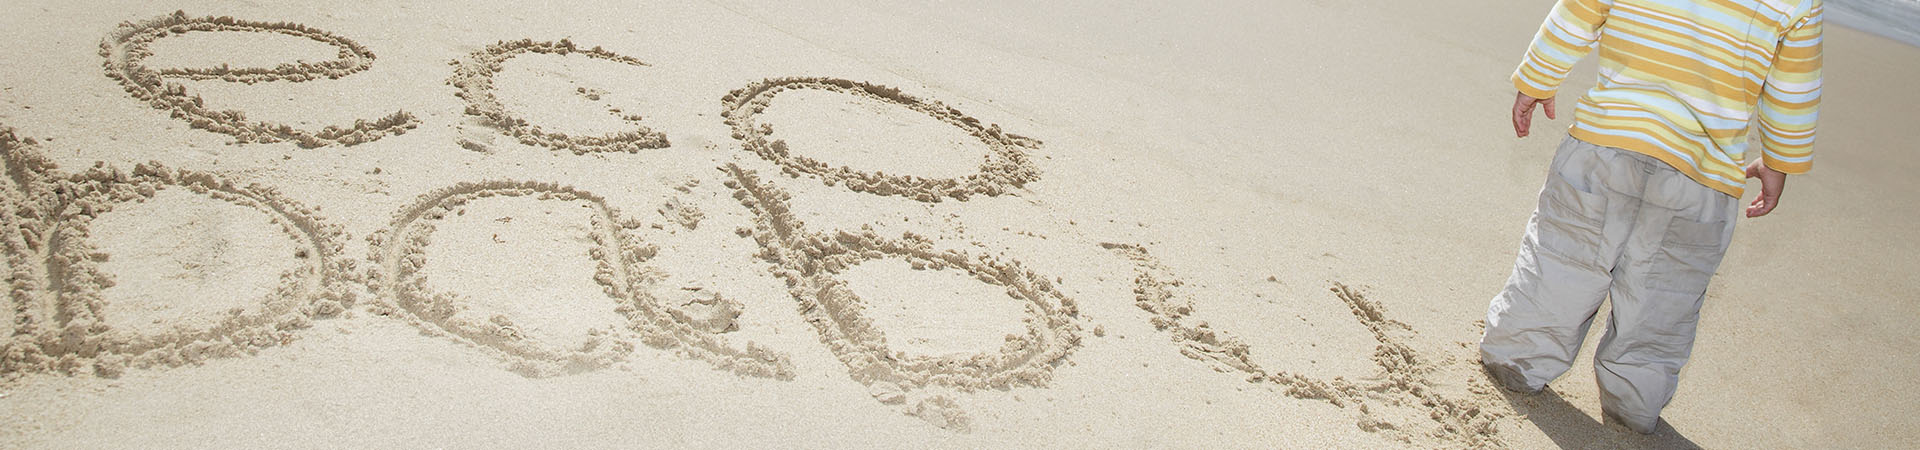 eco baby written on a beach